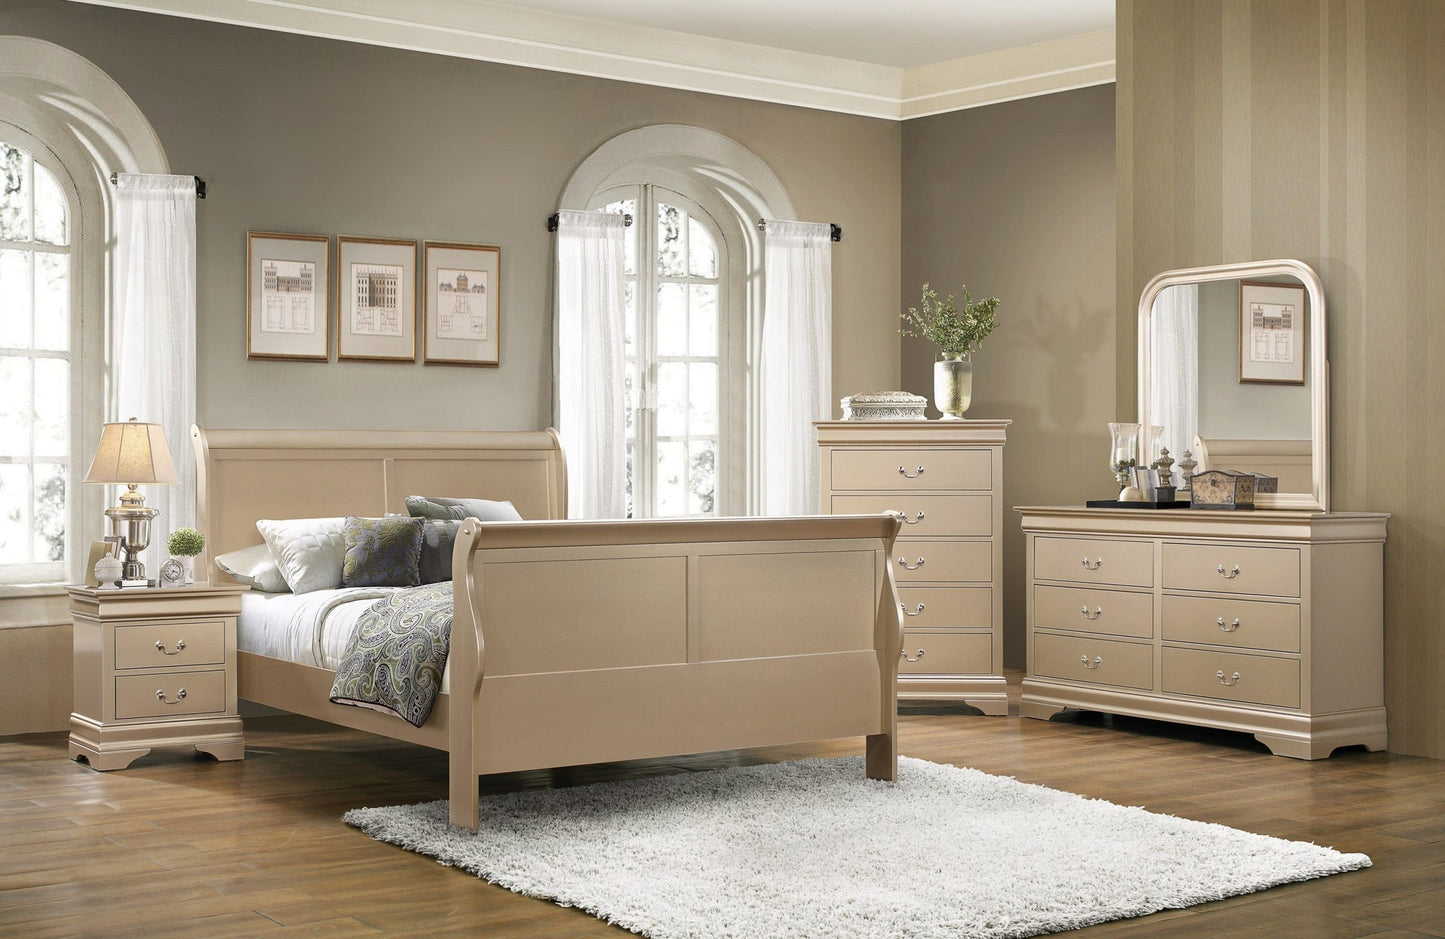 Louis Phillipe Gold Bedframe, Dresser, Mirror - Queen Size